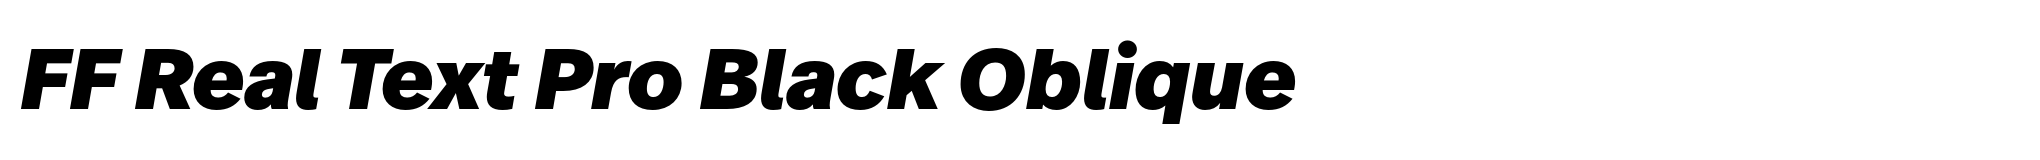 FF Real Text Pro Black Oblique image